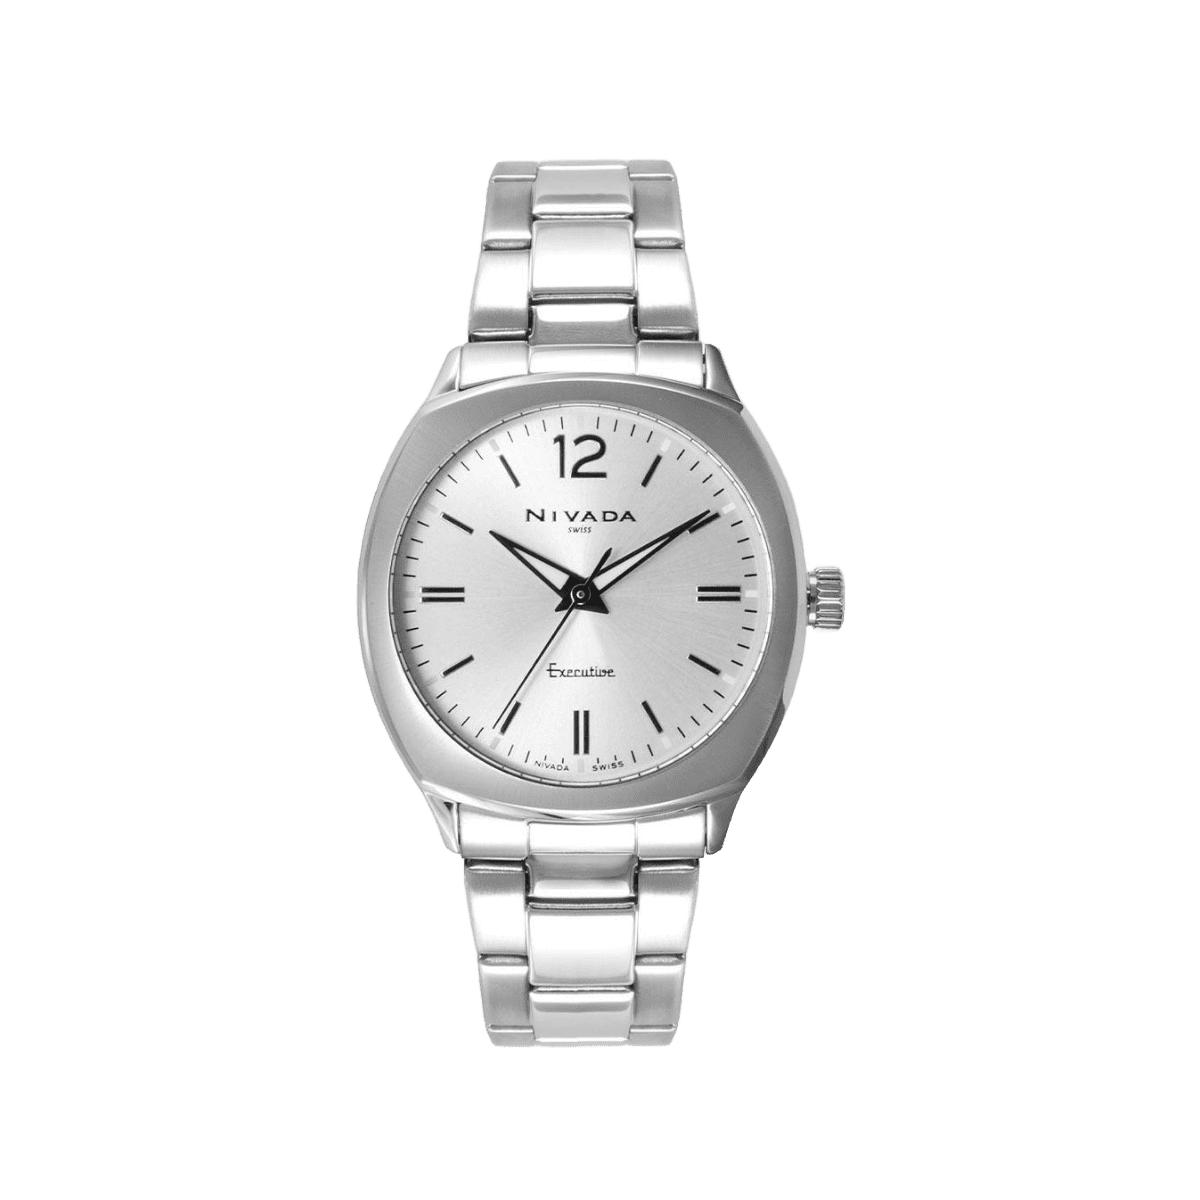 Executive Para Caballero - Altitud 1707 - Reloj Nivada Swiss